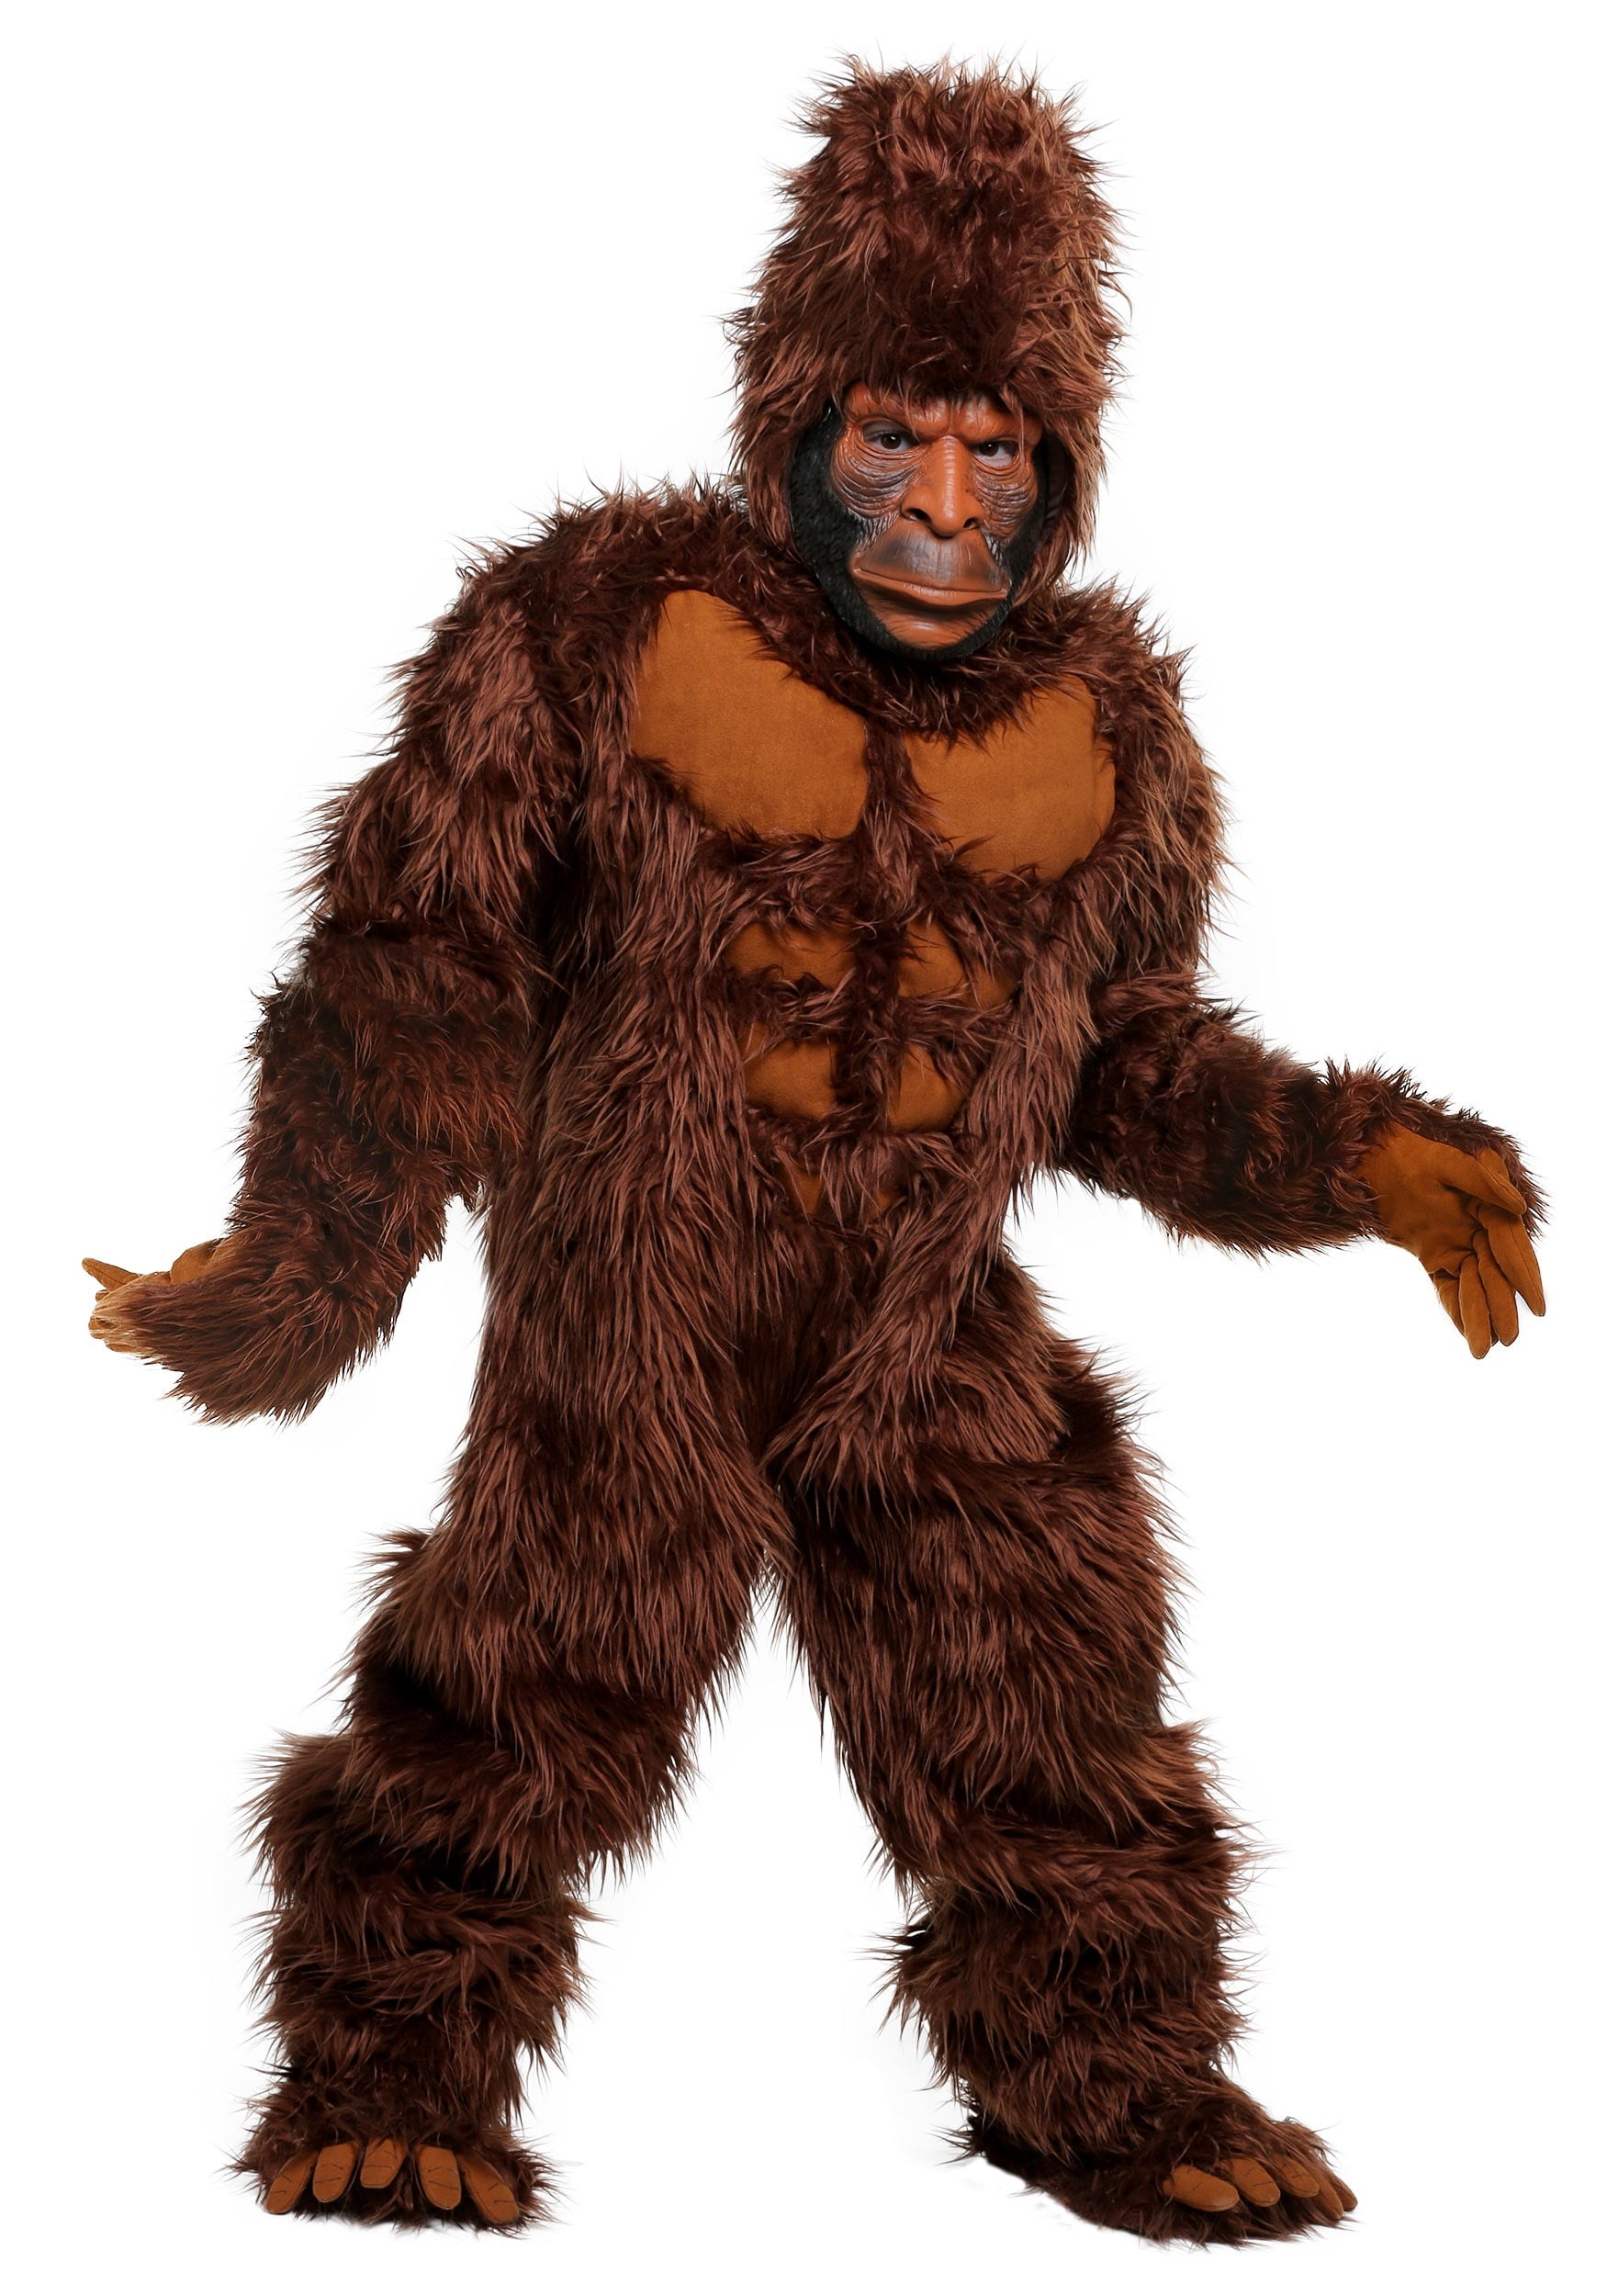 FUN Costumes Bigfoot Boy's Fancy-Dress Costume for Child, L